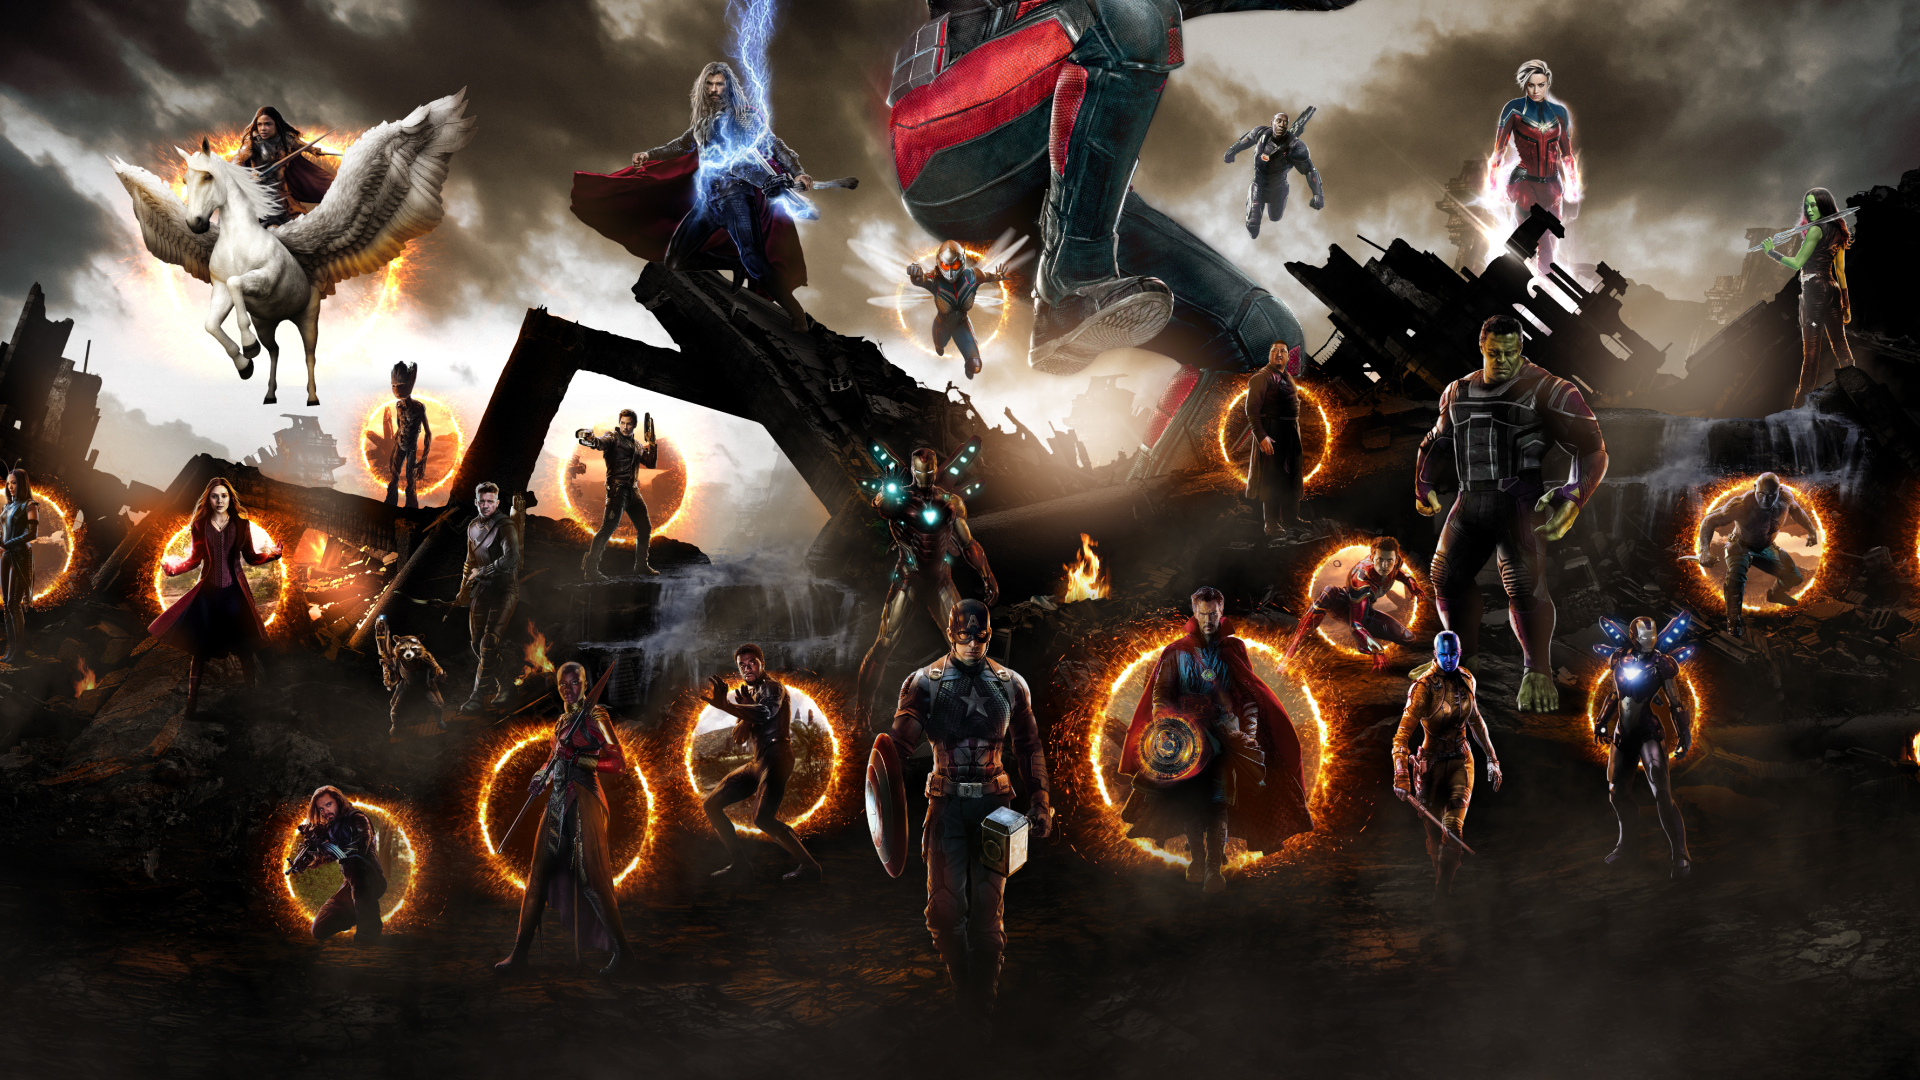 avengers full movie 1080p free